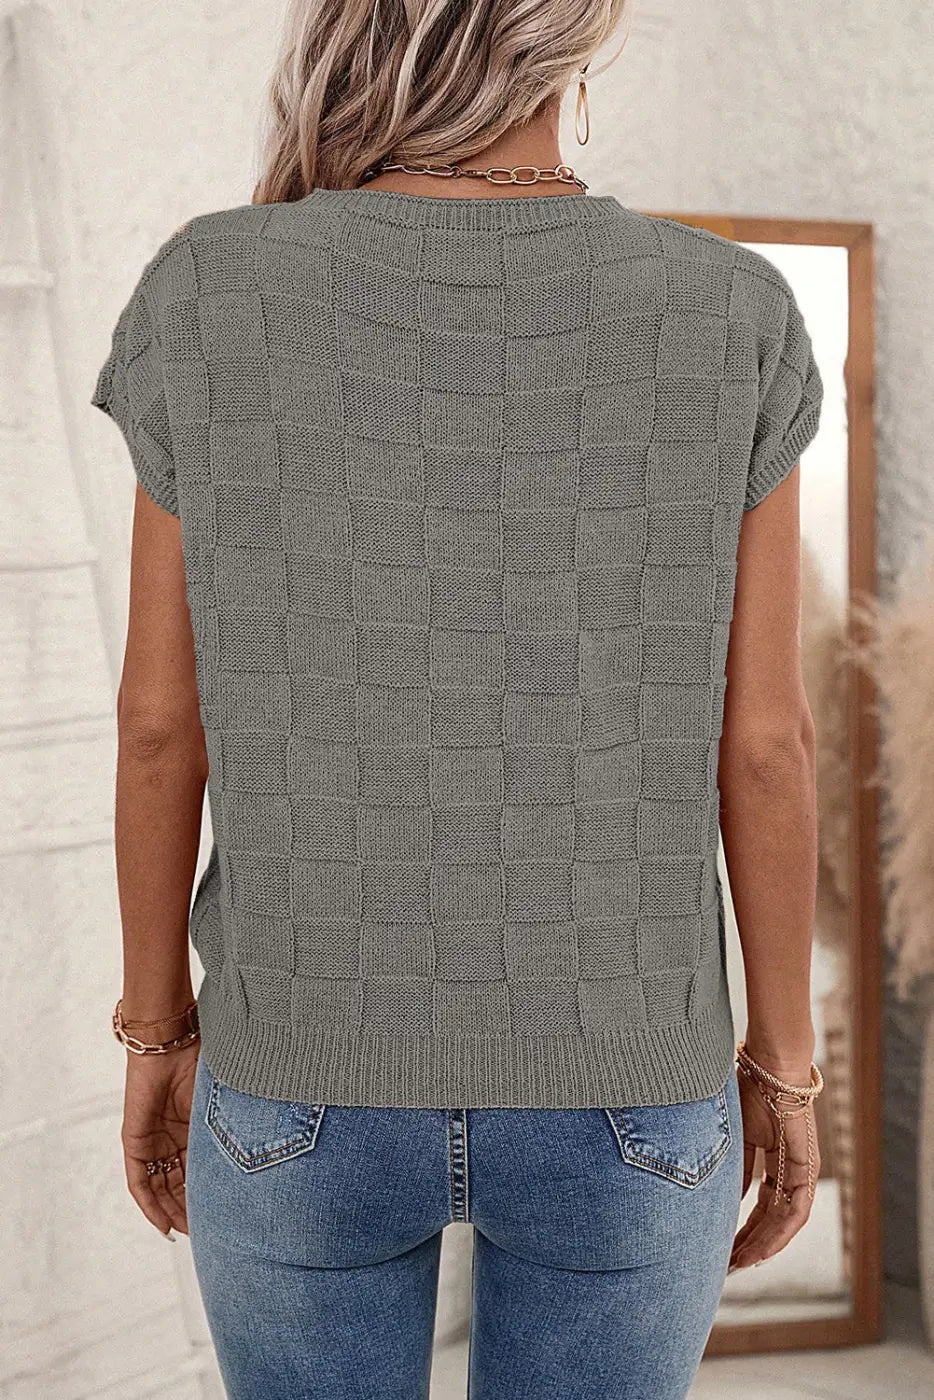 Lattice knit short sleeve sweater - sweaters